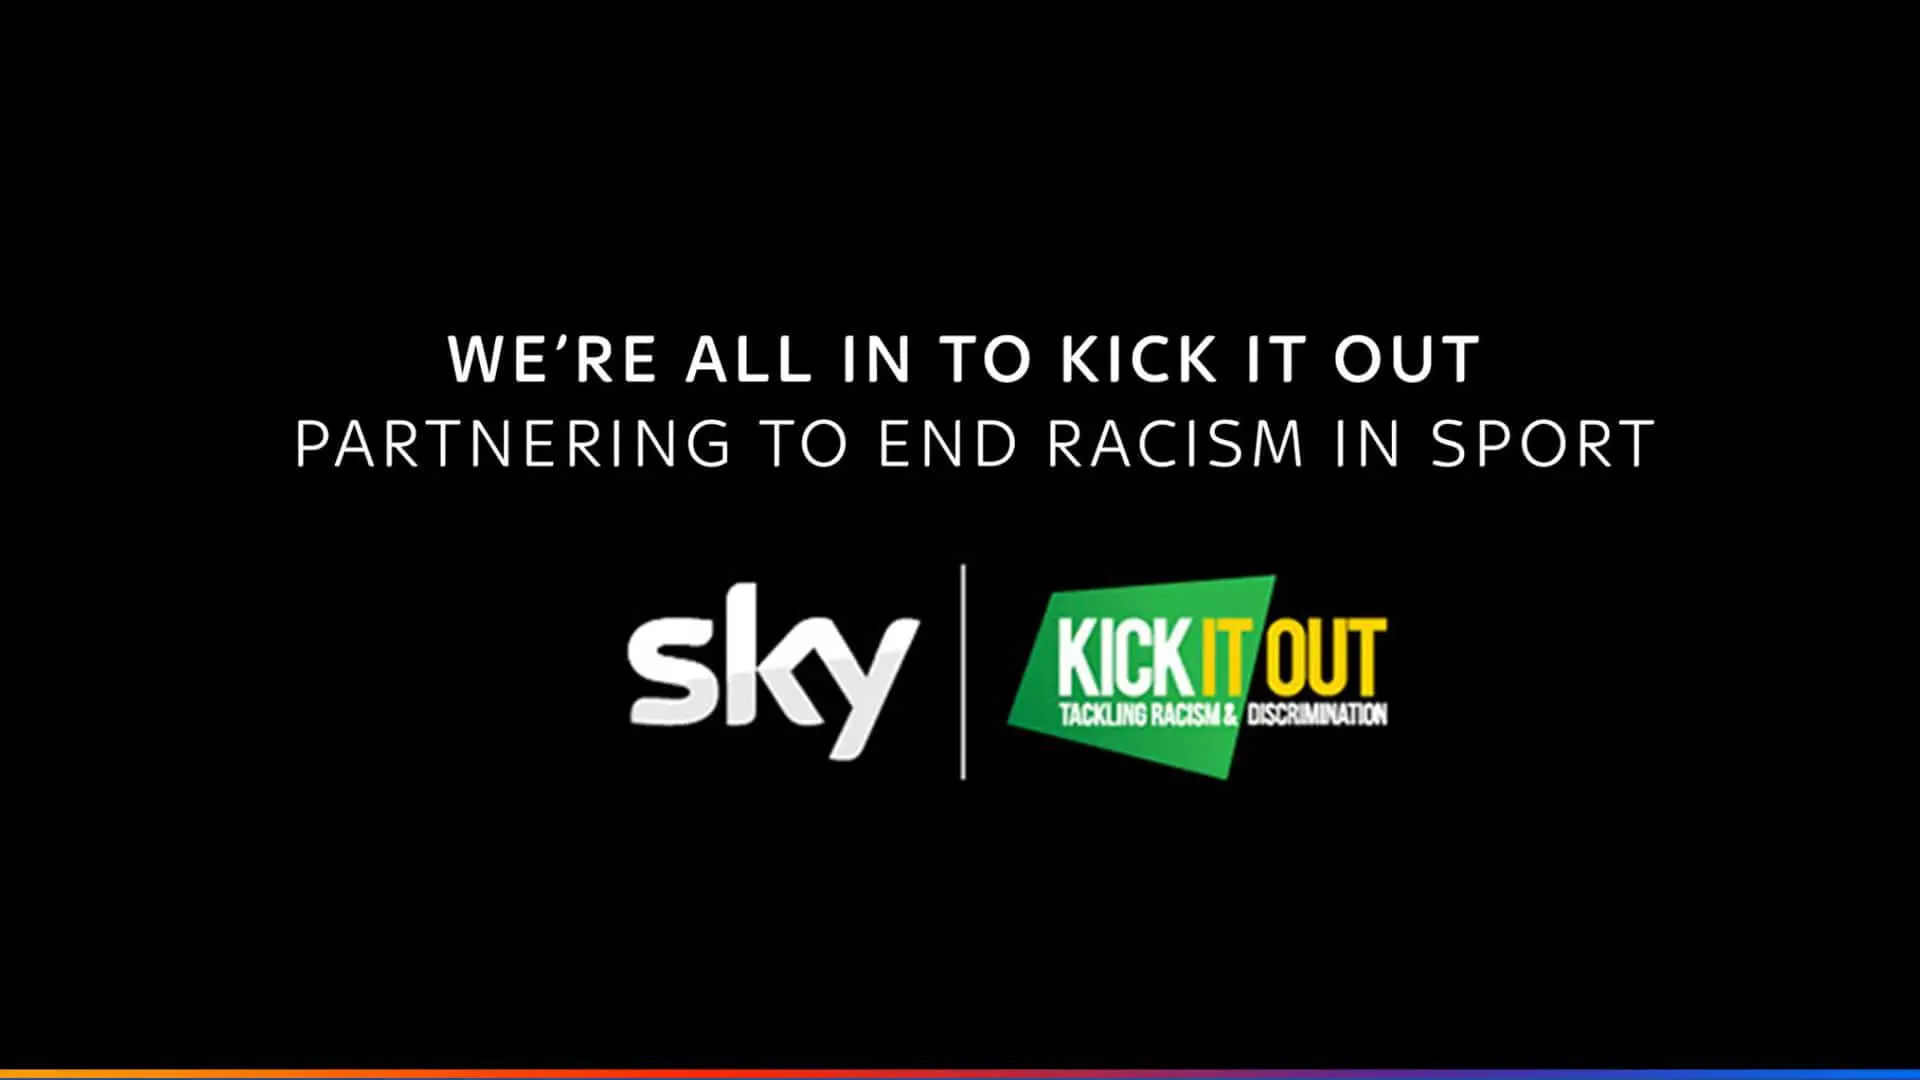 Sky kick it out partnership